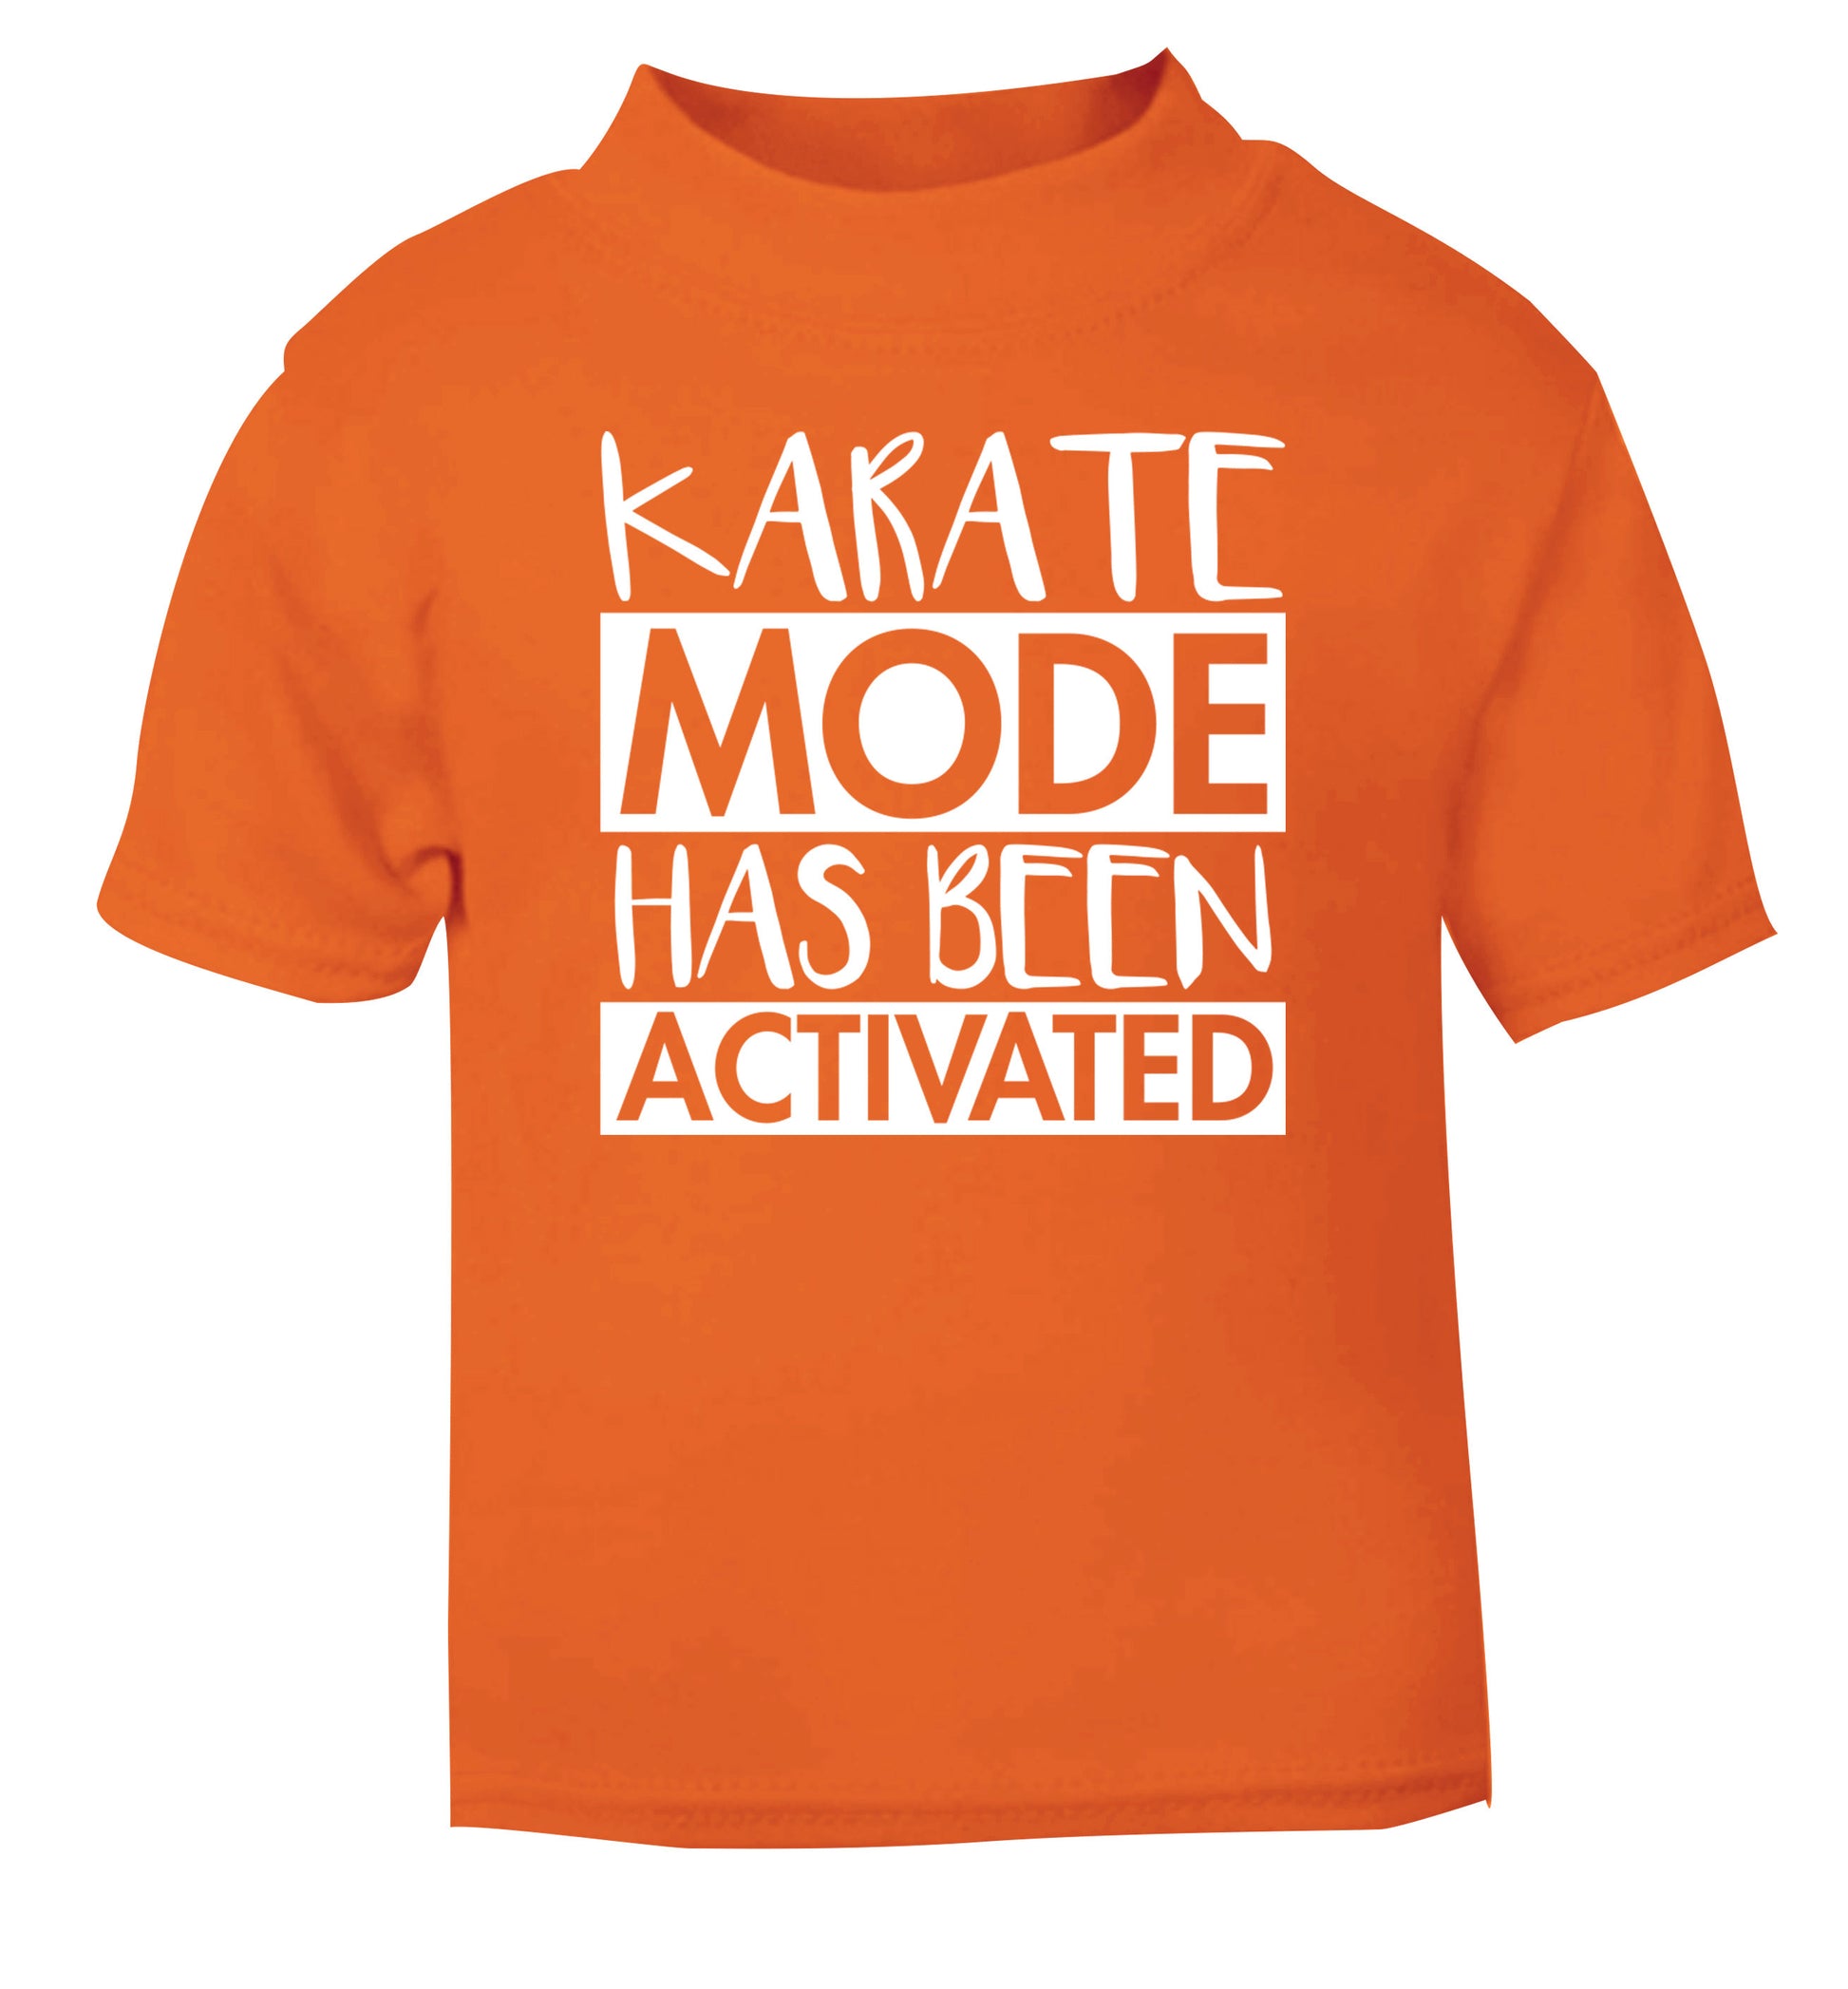 Karate mode activated orange Baby Toddler Tshirt 2 Years